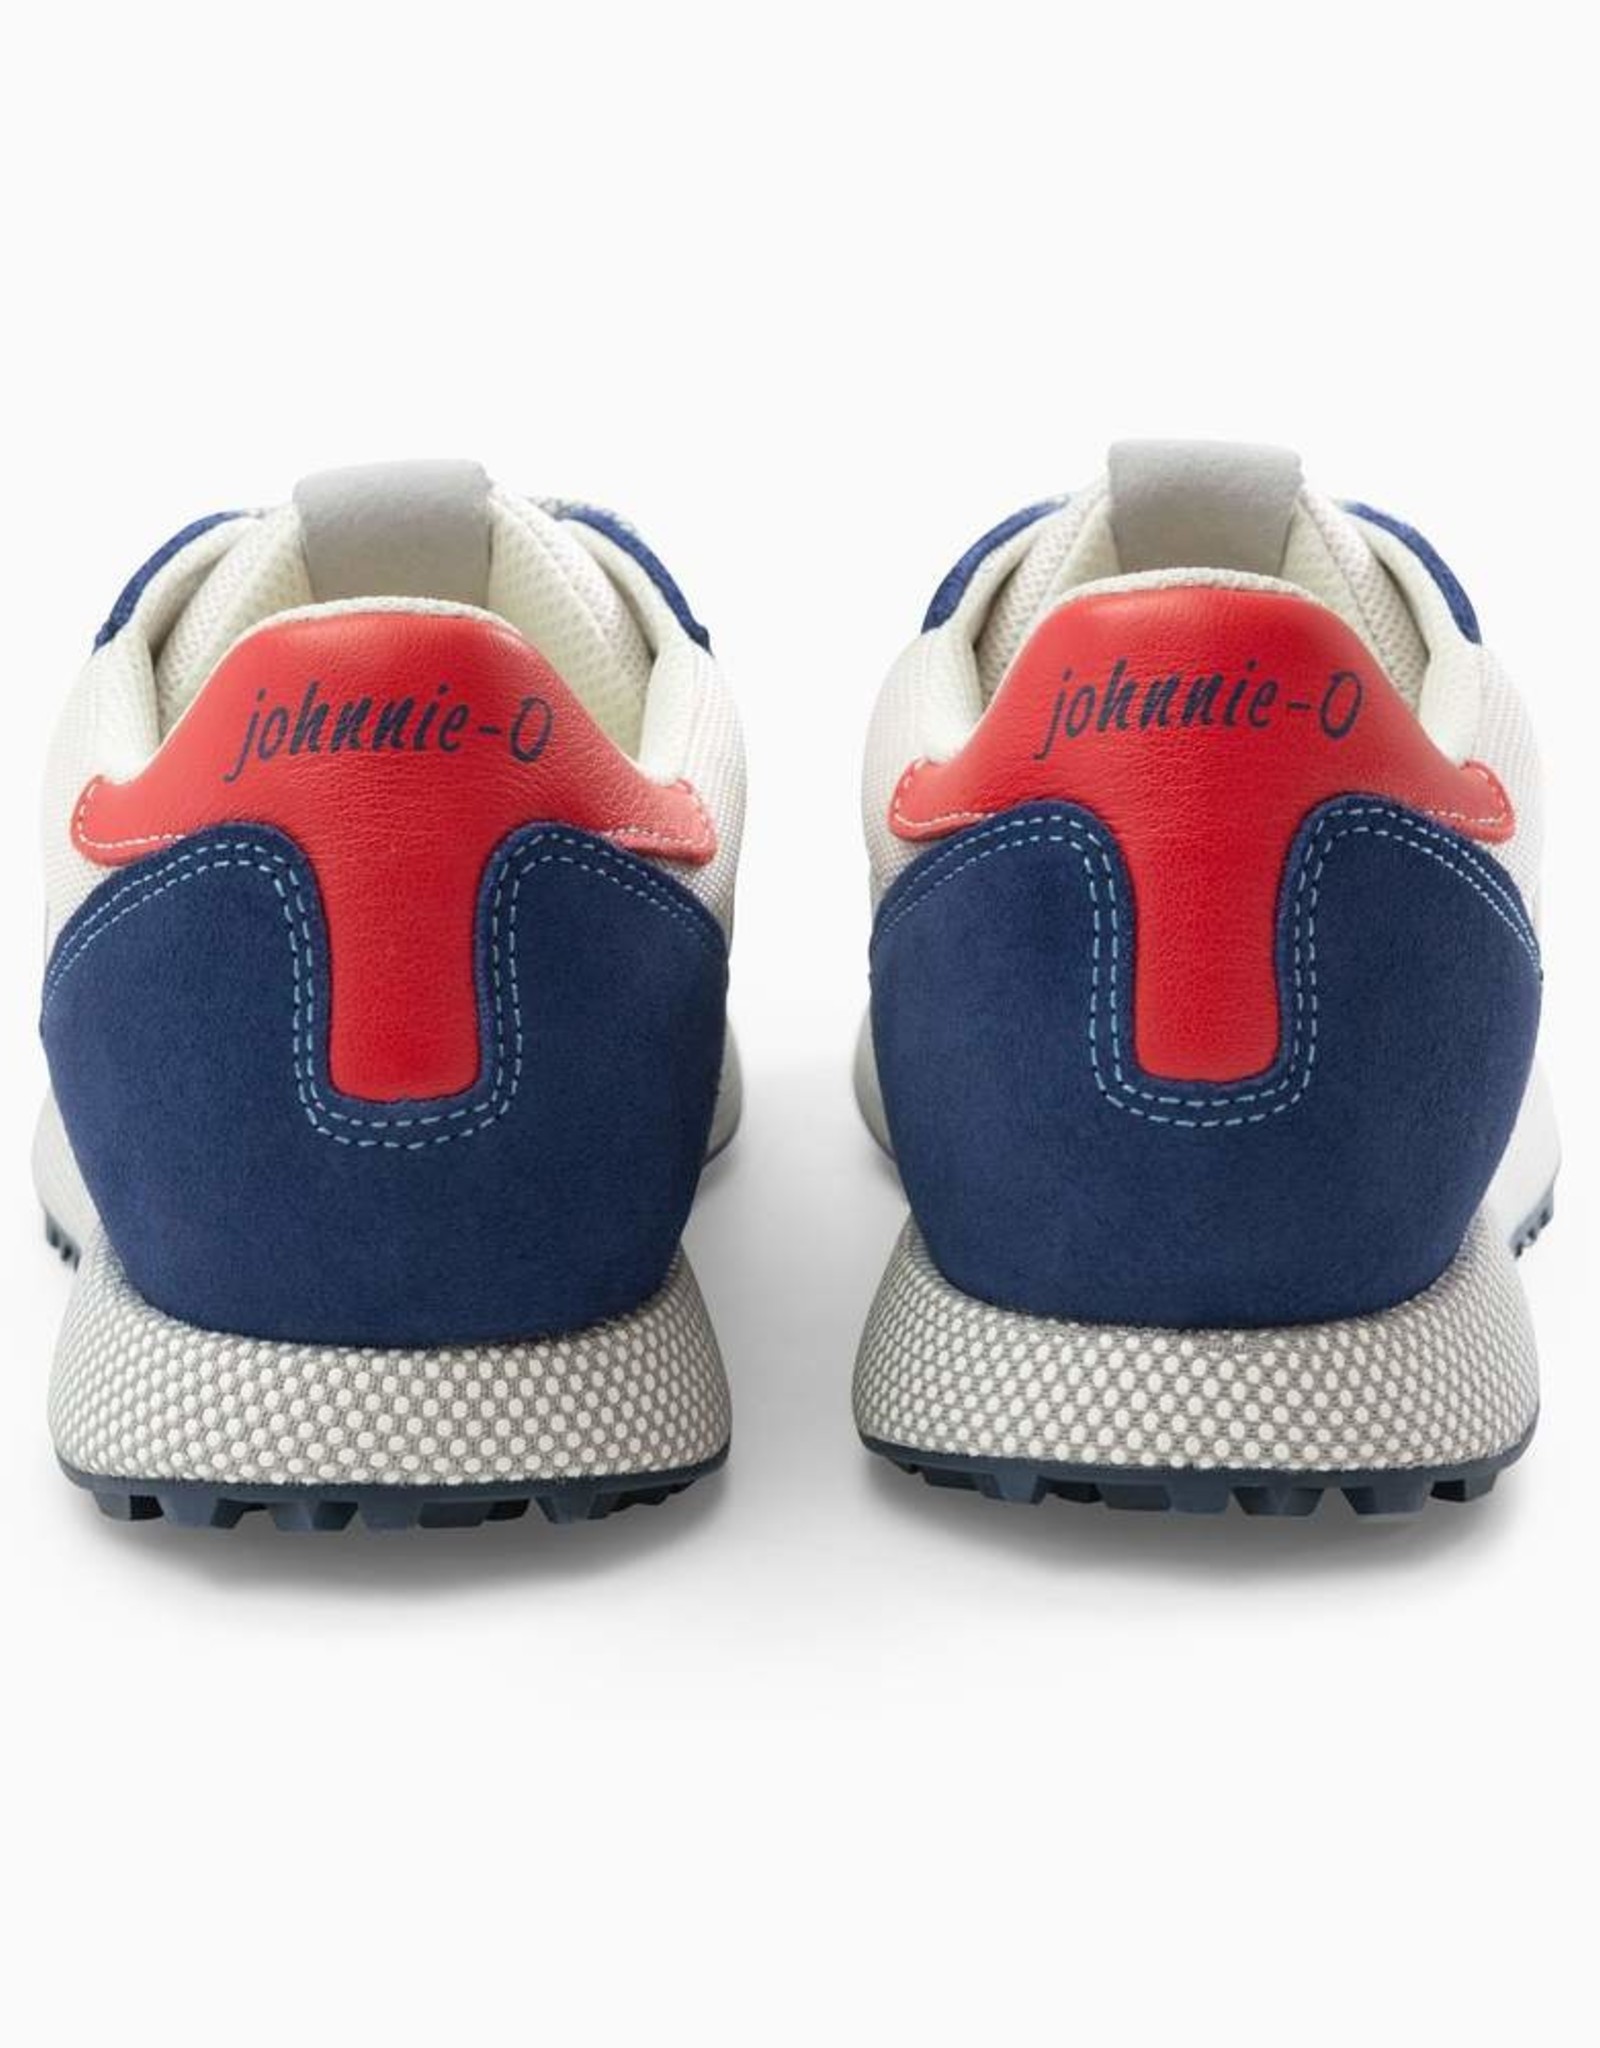 johnnie-O Range Runner Sneakers